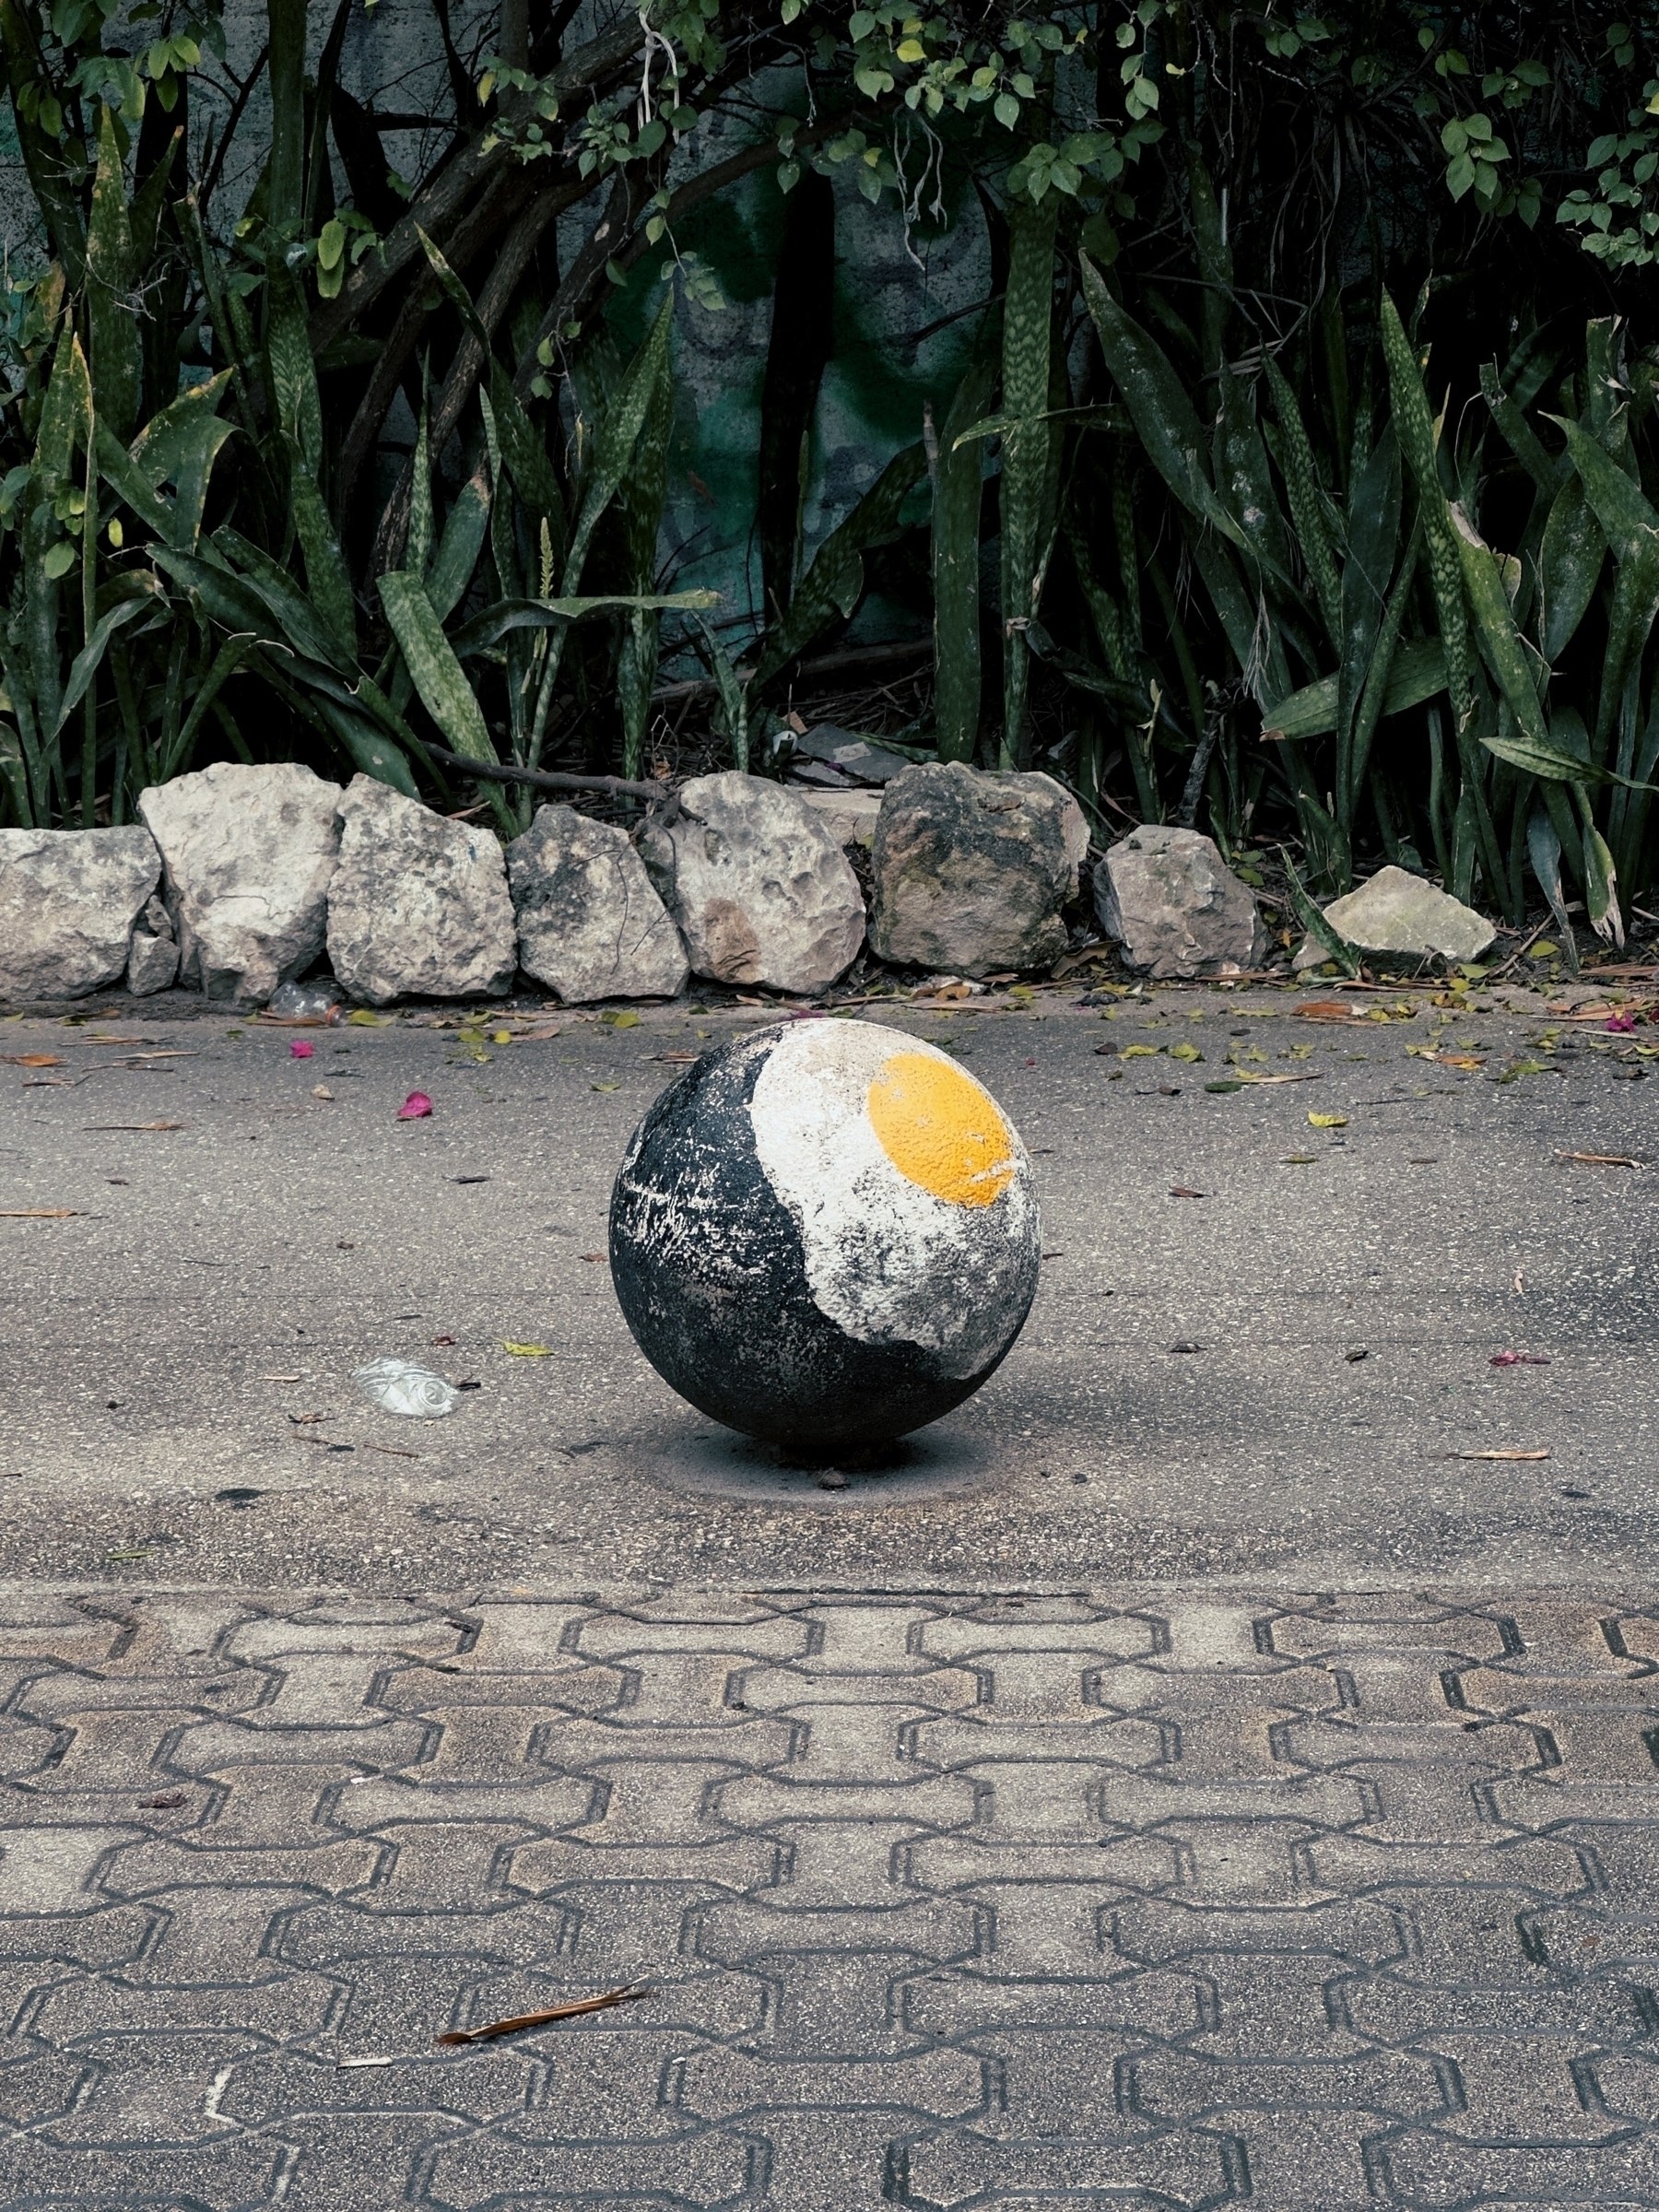 Egg painted on black concrete ball, sitting on a tiled sidewalk